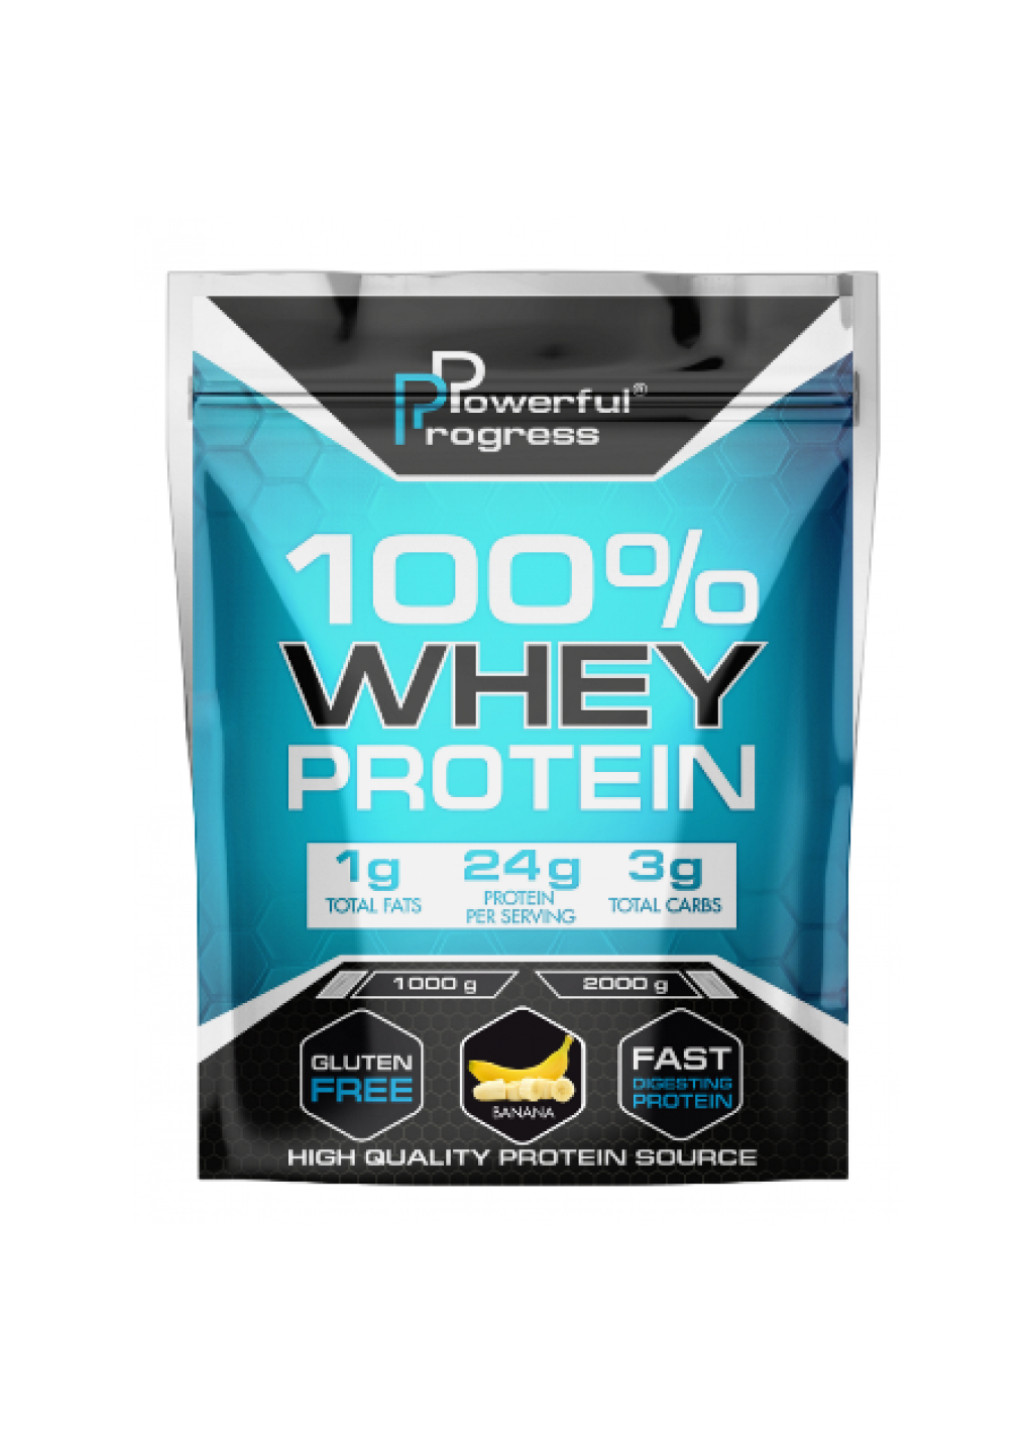 Протеїн концентрат (24 грами білку) 100% Whey Protein Instant - 2000g Pure Powerful Progress (254805184)